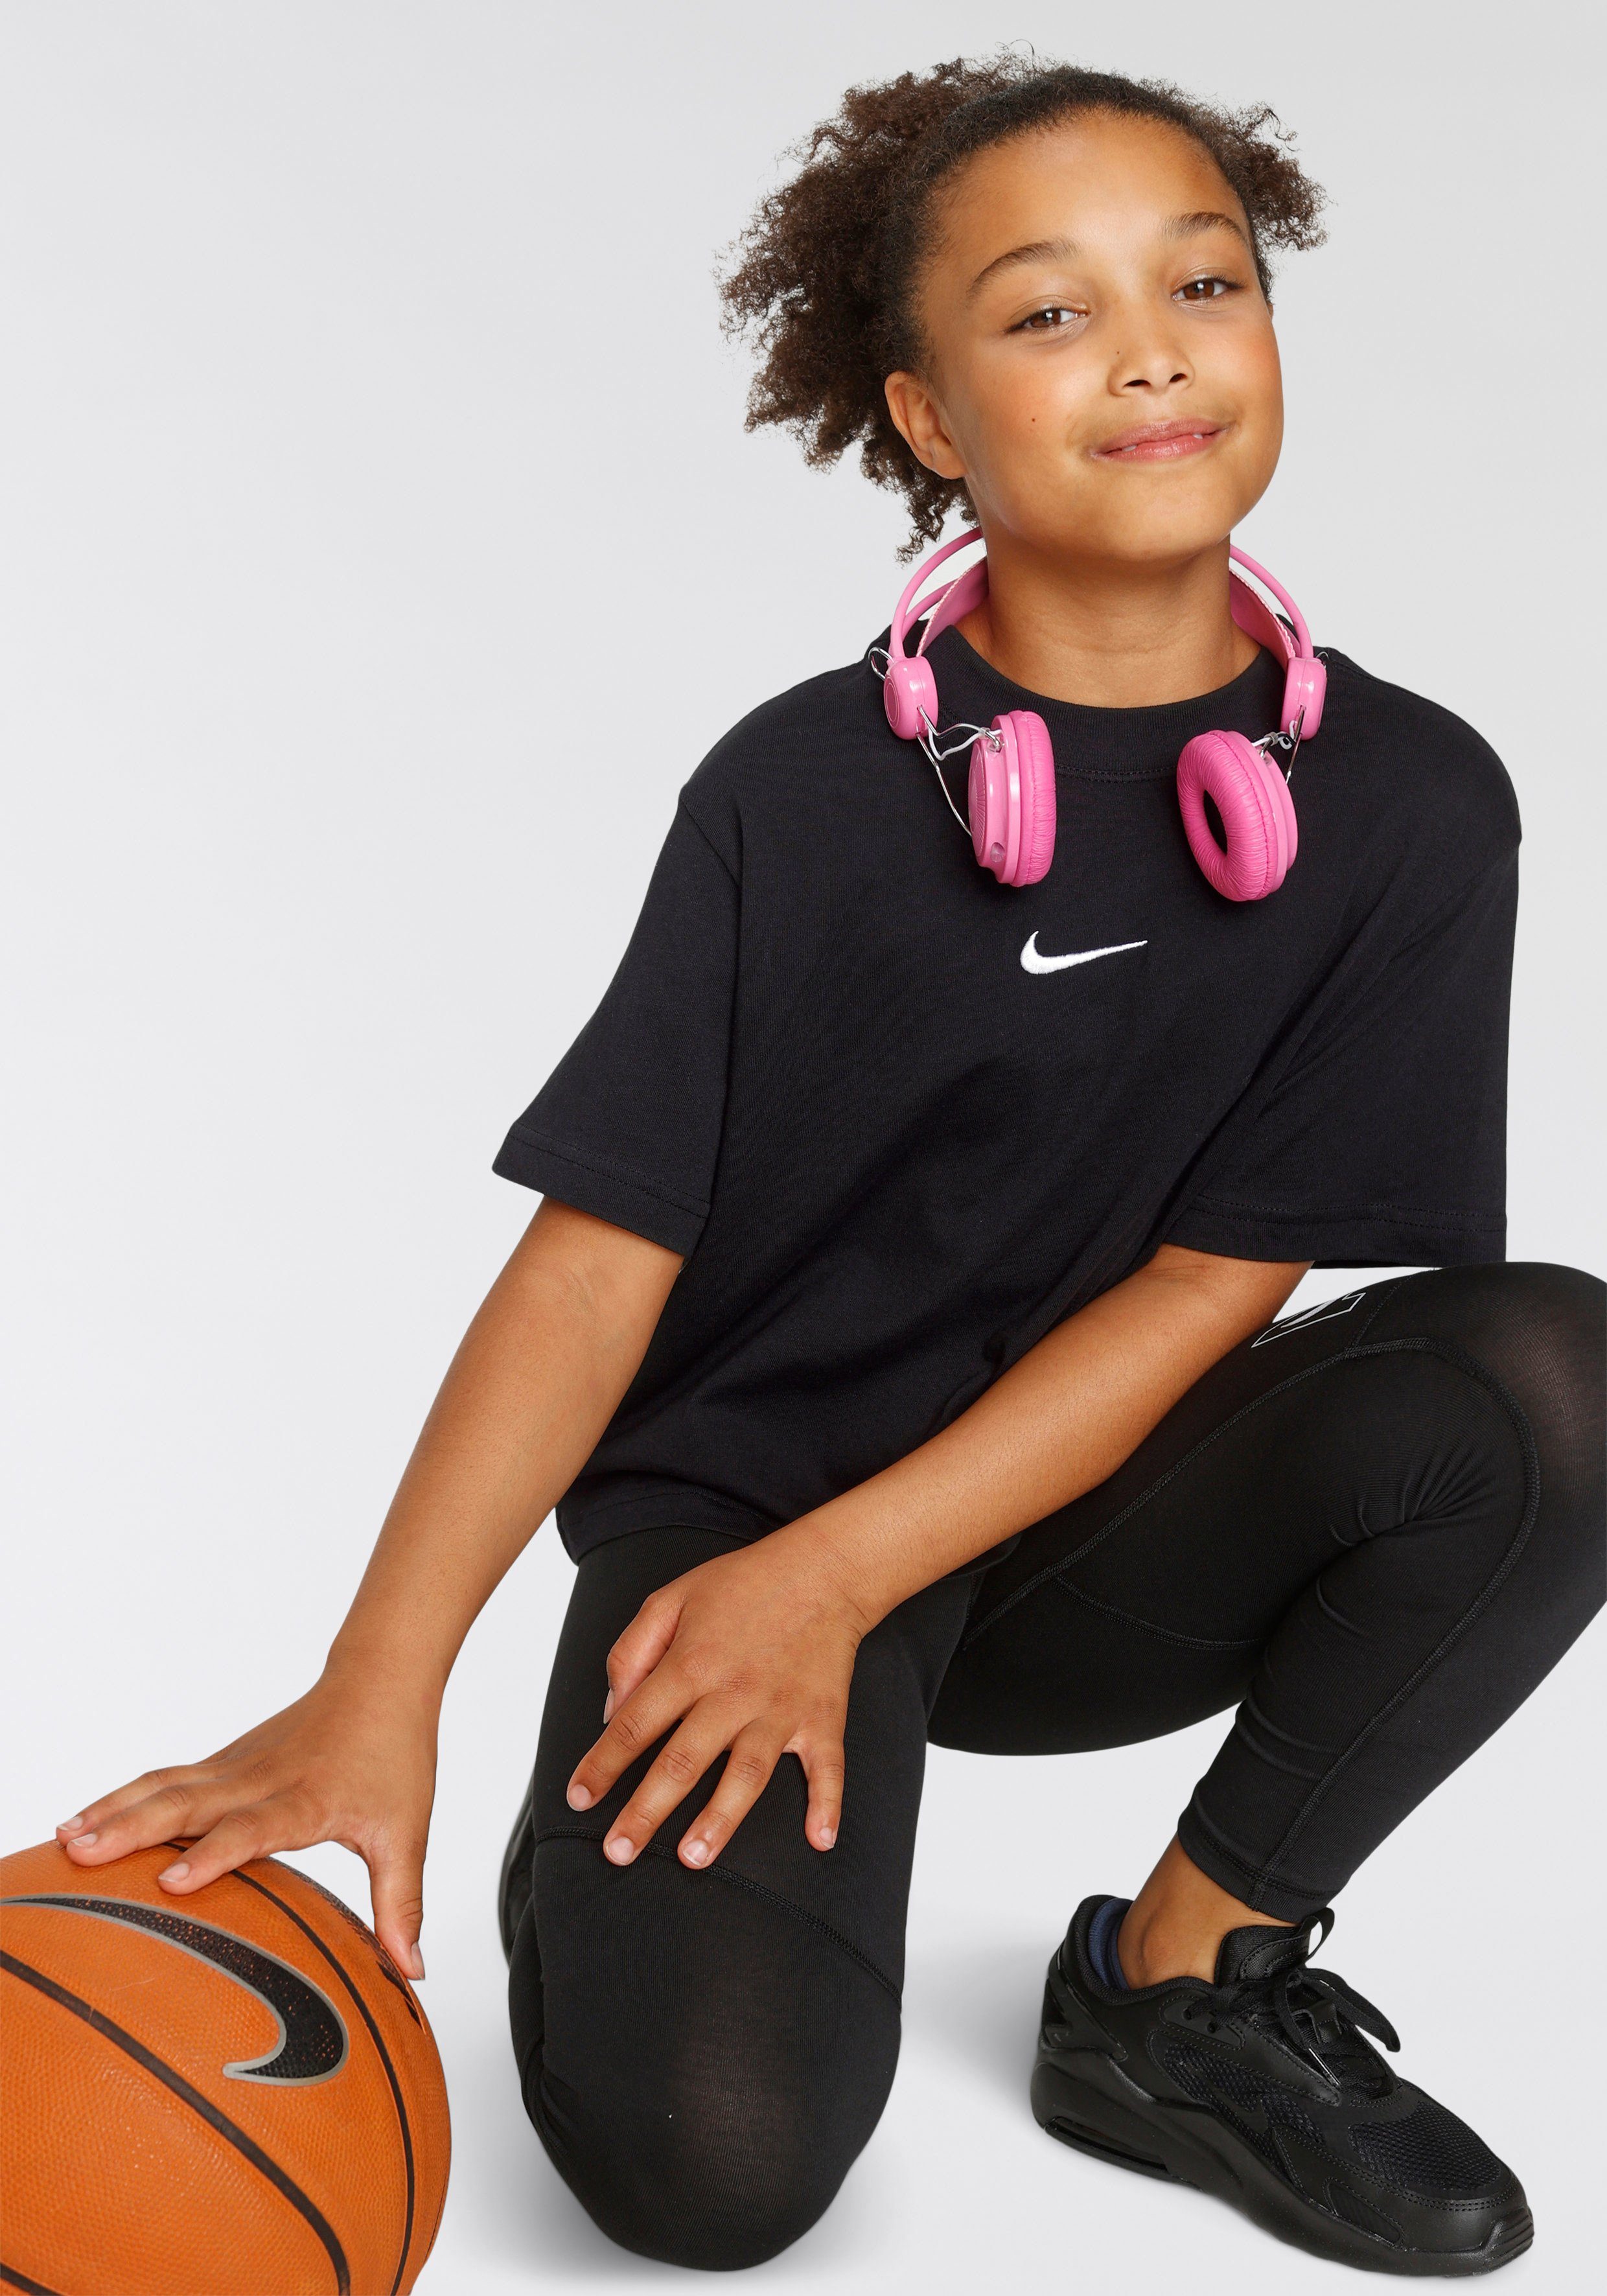 T-SHIRT Nike BIG T-Shirt BLACK/WHITE (GIRLS) Sportswear KIDS'